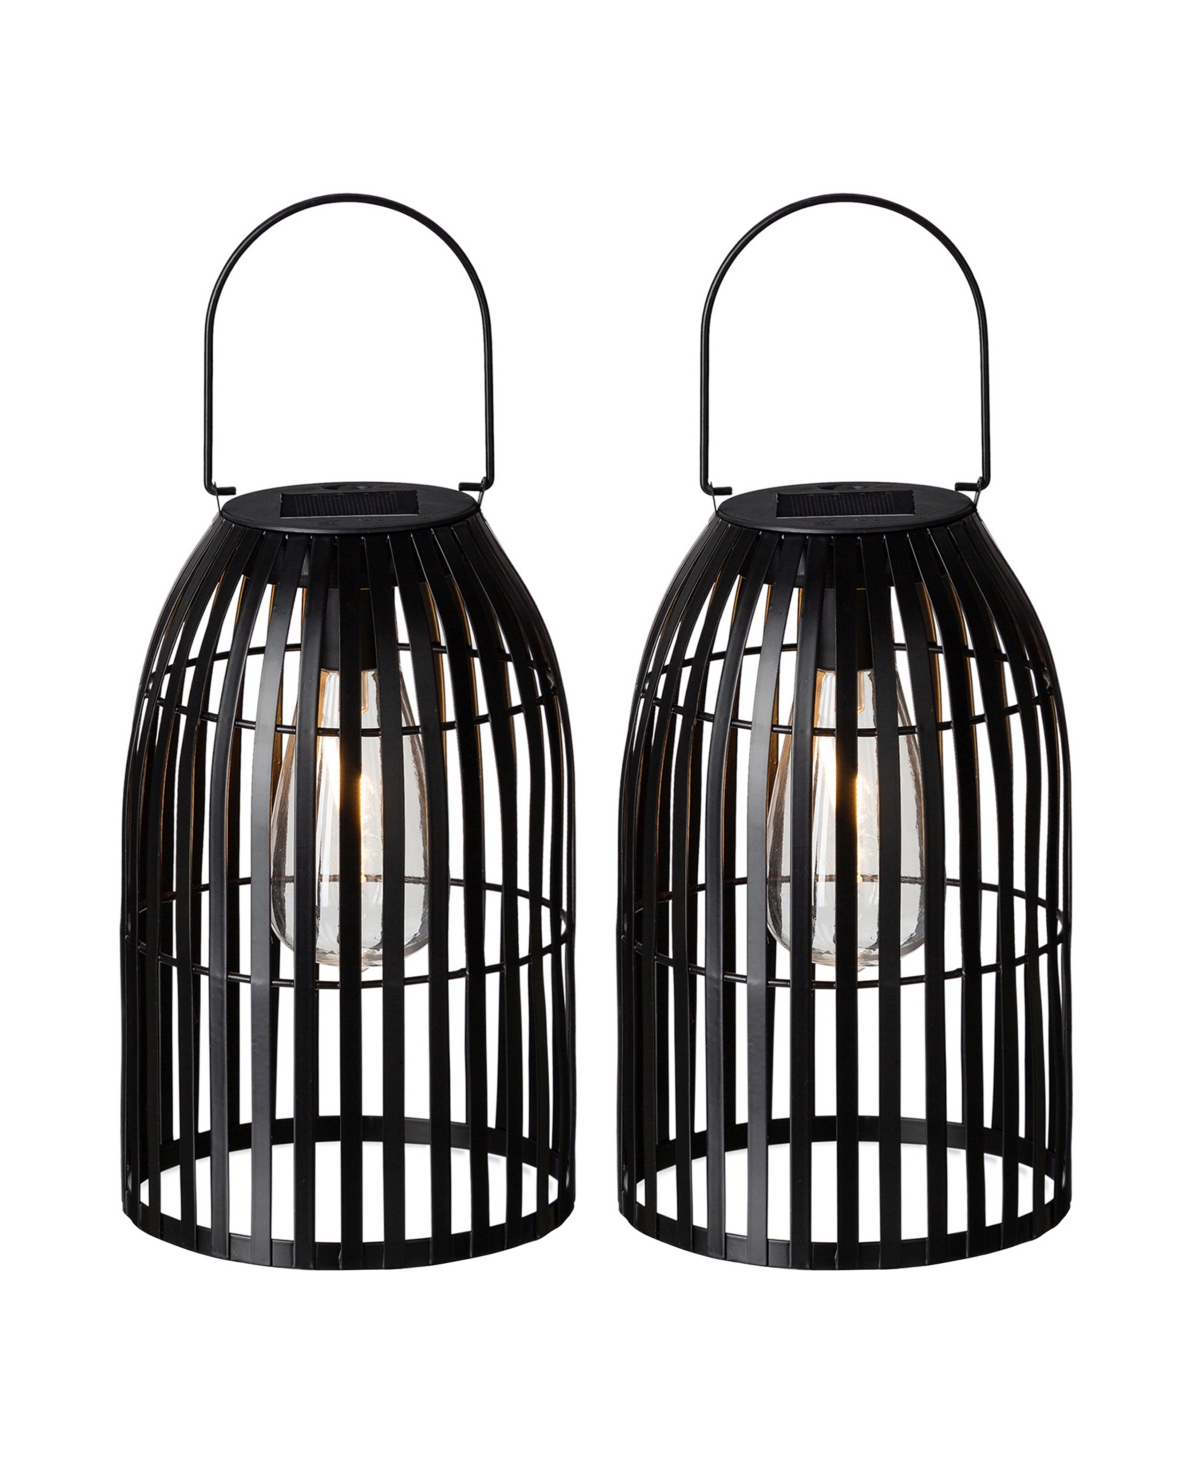 9.75" H Set of 2 Metal Stripes Solar Powered Edison Bulb Outdoor Hanging Lantern - Black